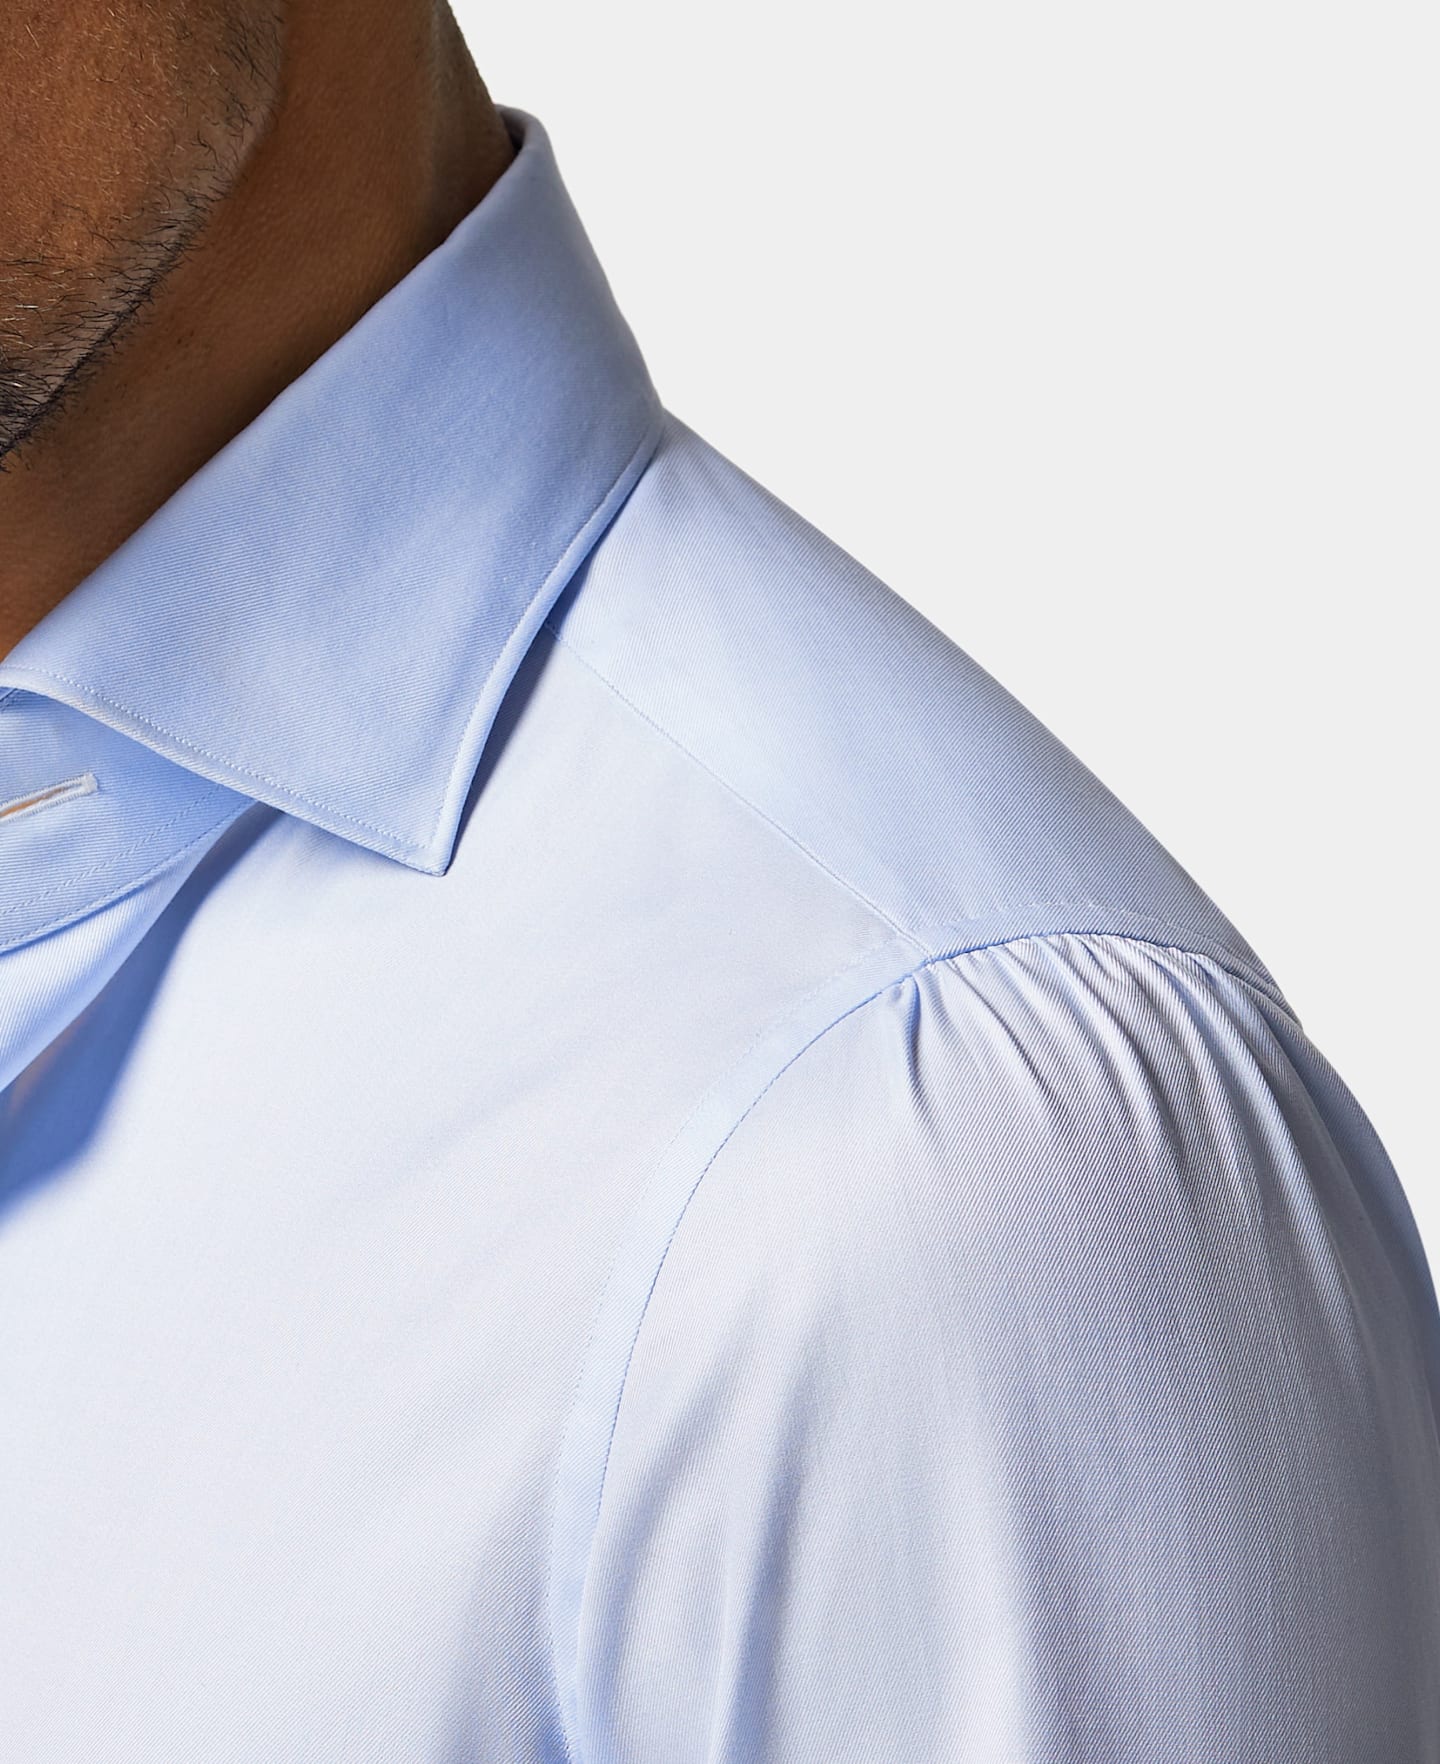 Kelder paus Portiek Men's Shirts - Classic, Casual & Denim Shirts for Men in Luxurious Fabrics  | SUITSUPPLY US